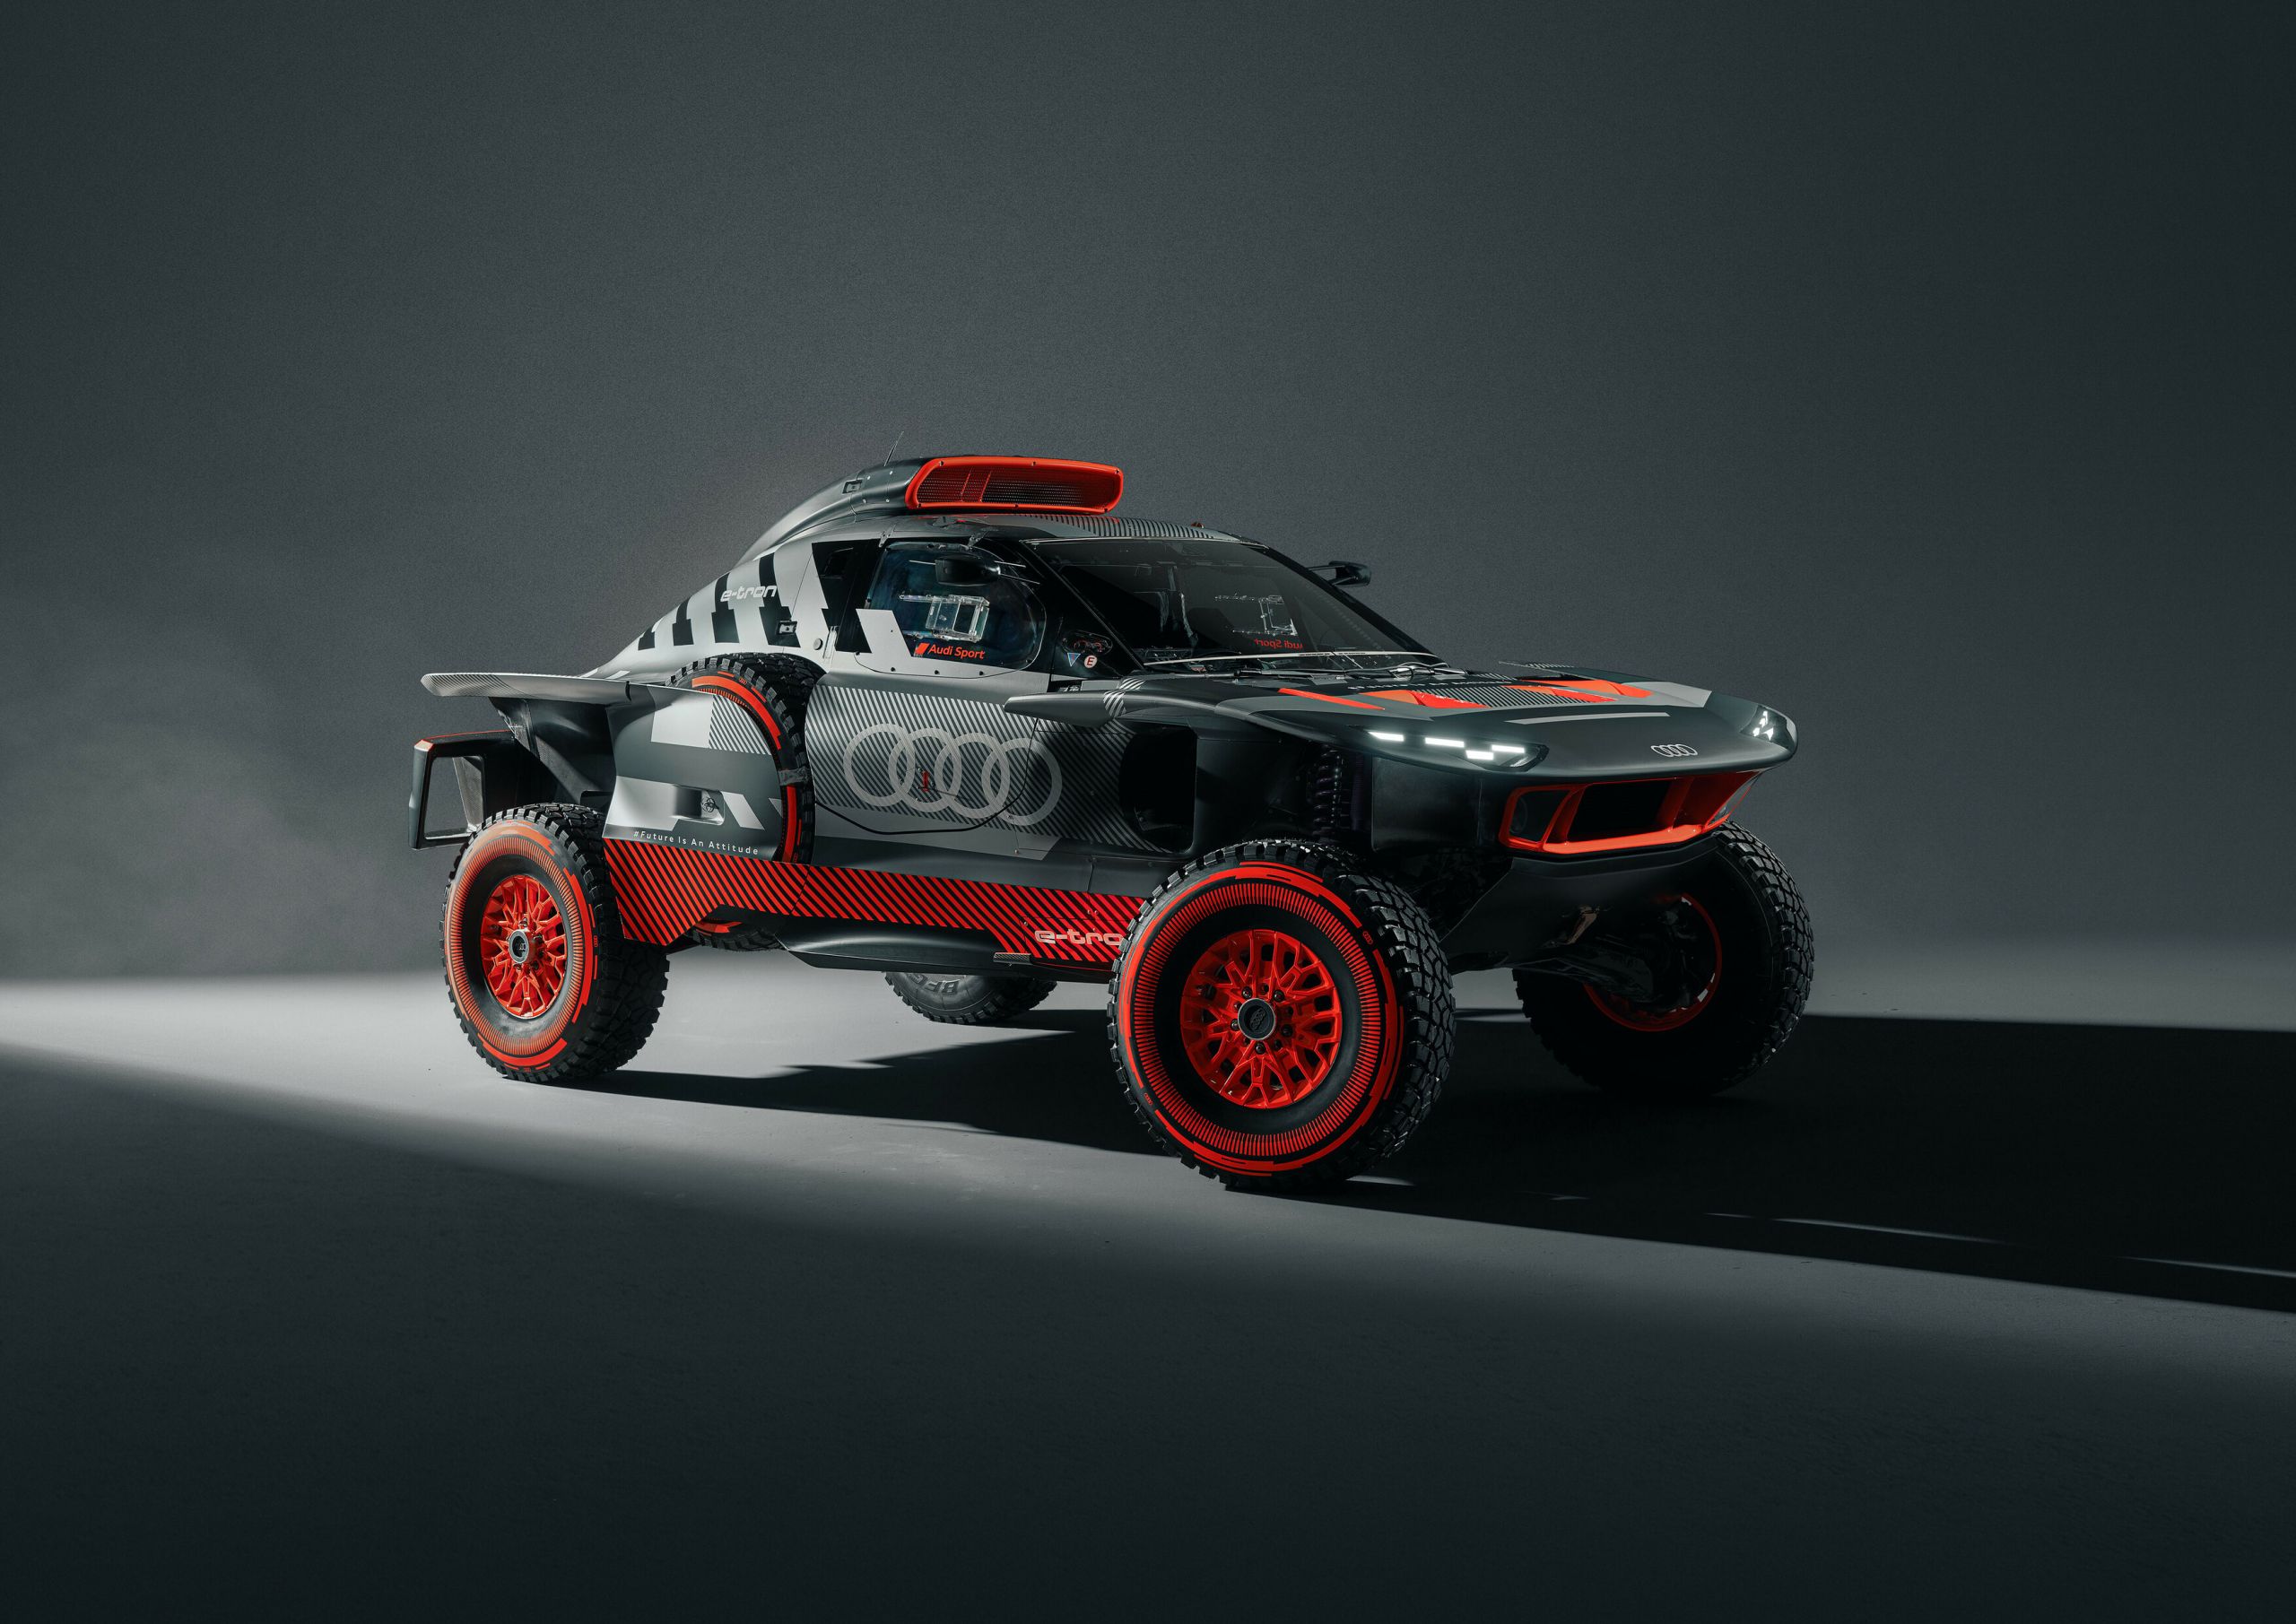 Dakar Rallly Audi RS Q e tron action front